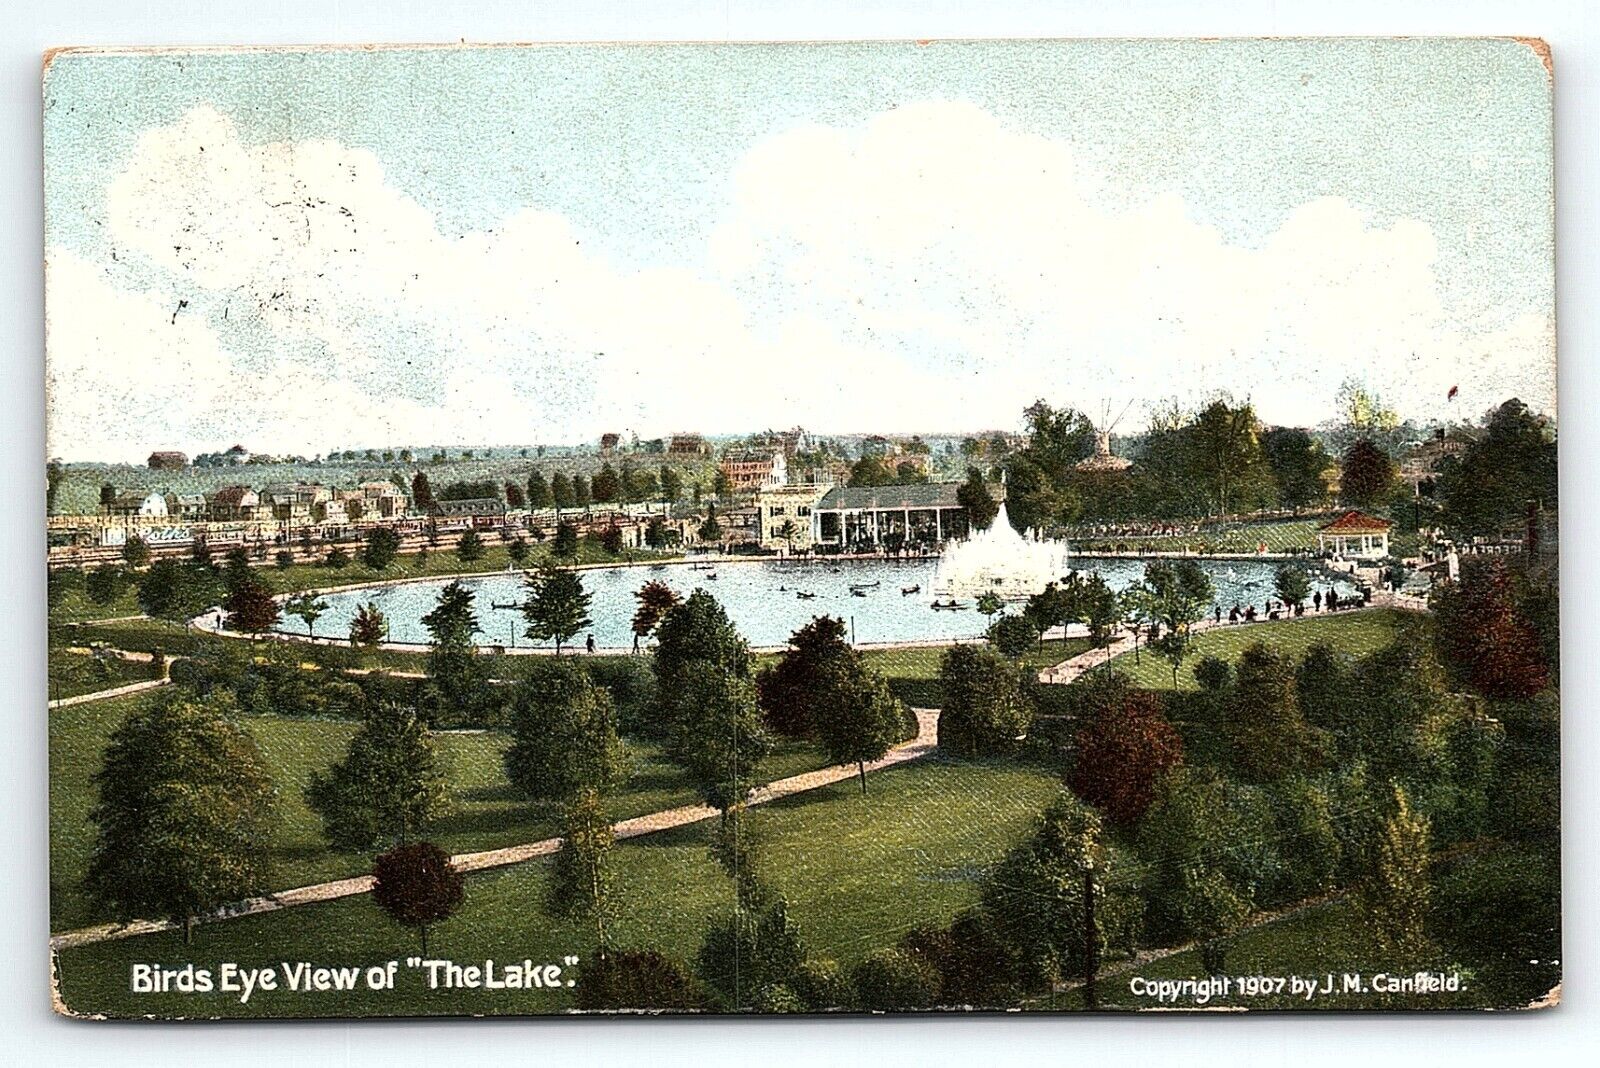 1907 WILLOW GROVE PARK PA BIRD'S EYE VIEW OF THE LAKE  POSTCARD P4583